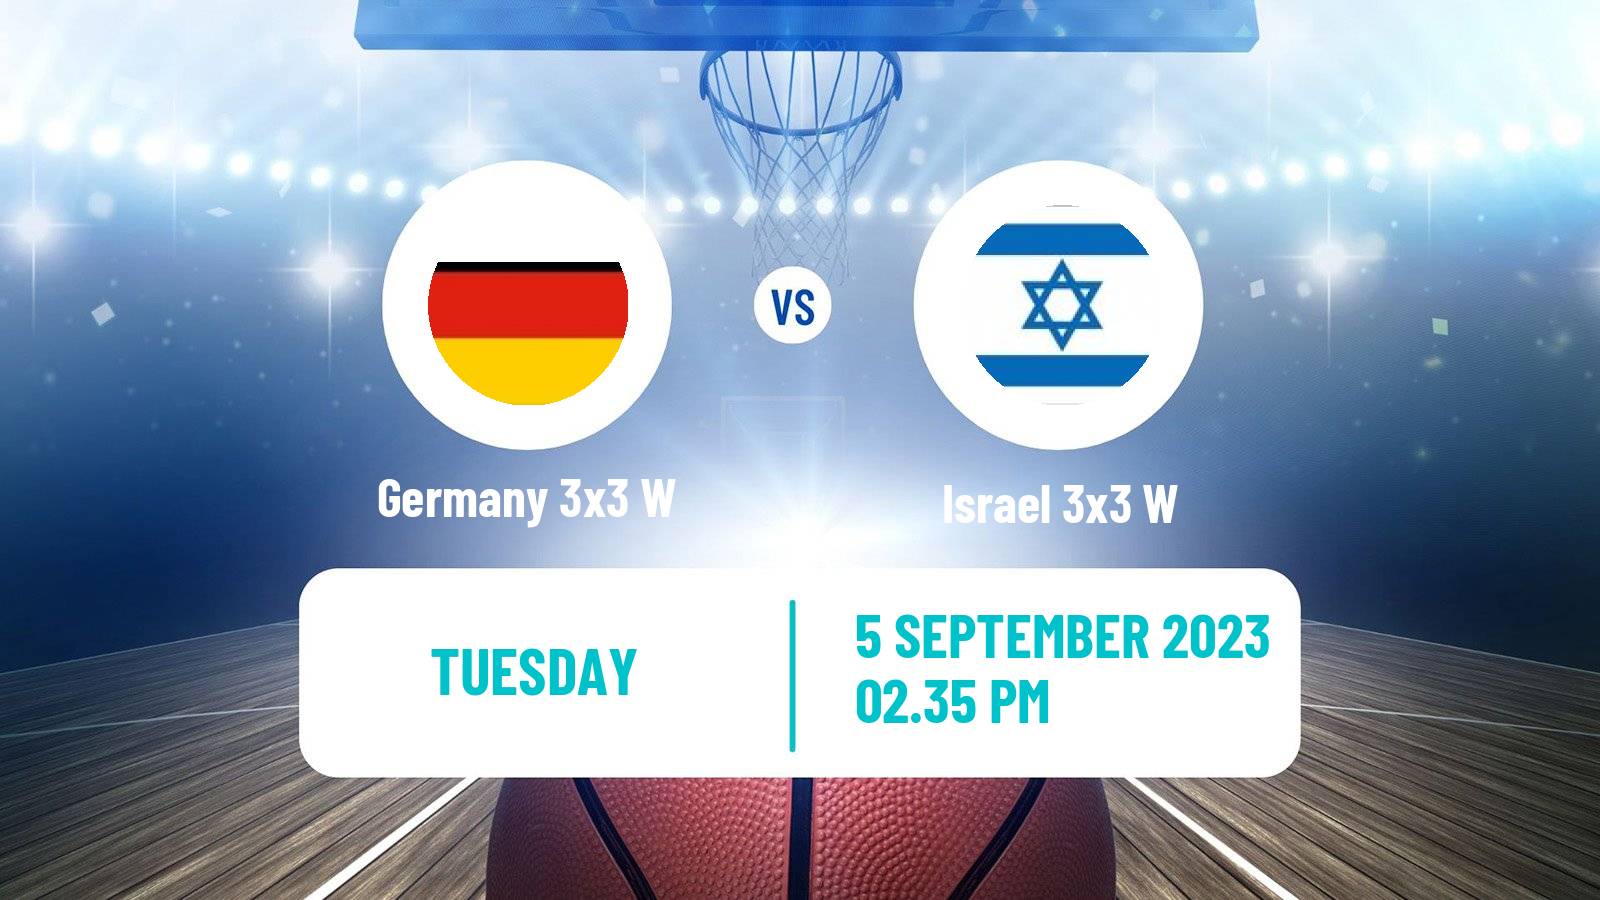 Basketball Europe Cup Basketball 3x3 Women Germany 3x3 W - Israel 3x3 W